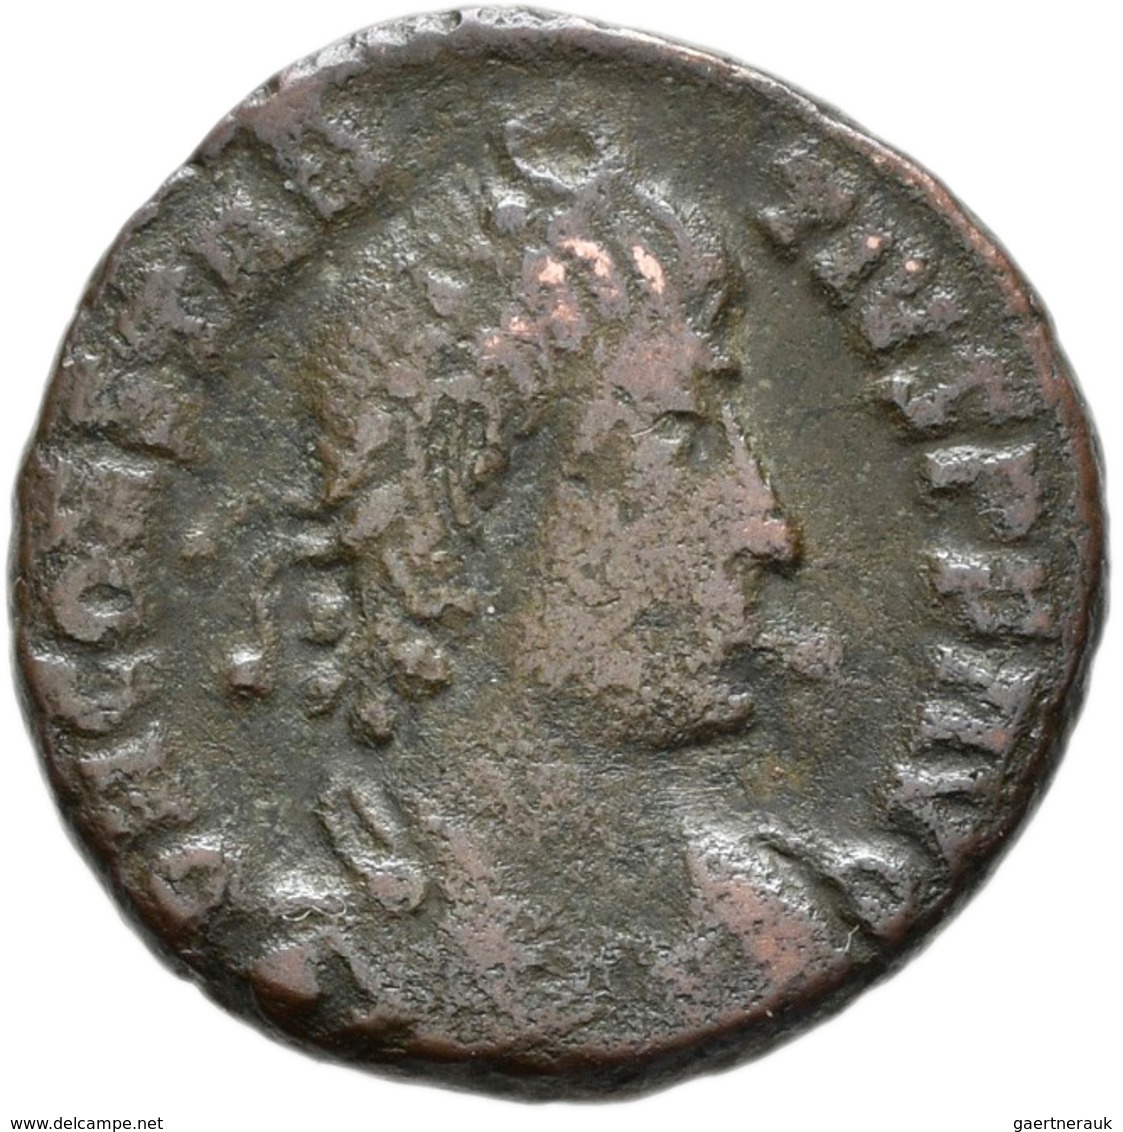 Constantius II. (324 - 337 - 361): Constantius II. 324-361: Kleinbronze, 2,71 G, Sehr Schön. - The Christian Empire (307 AD Tot 363 AD)